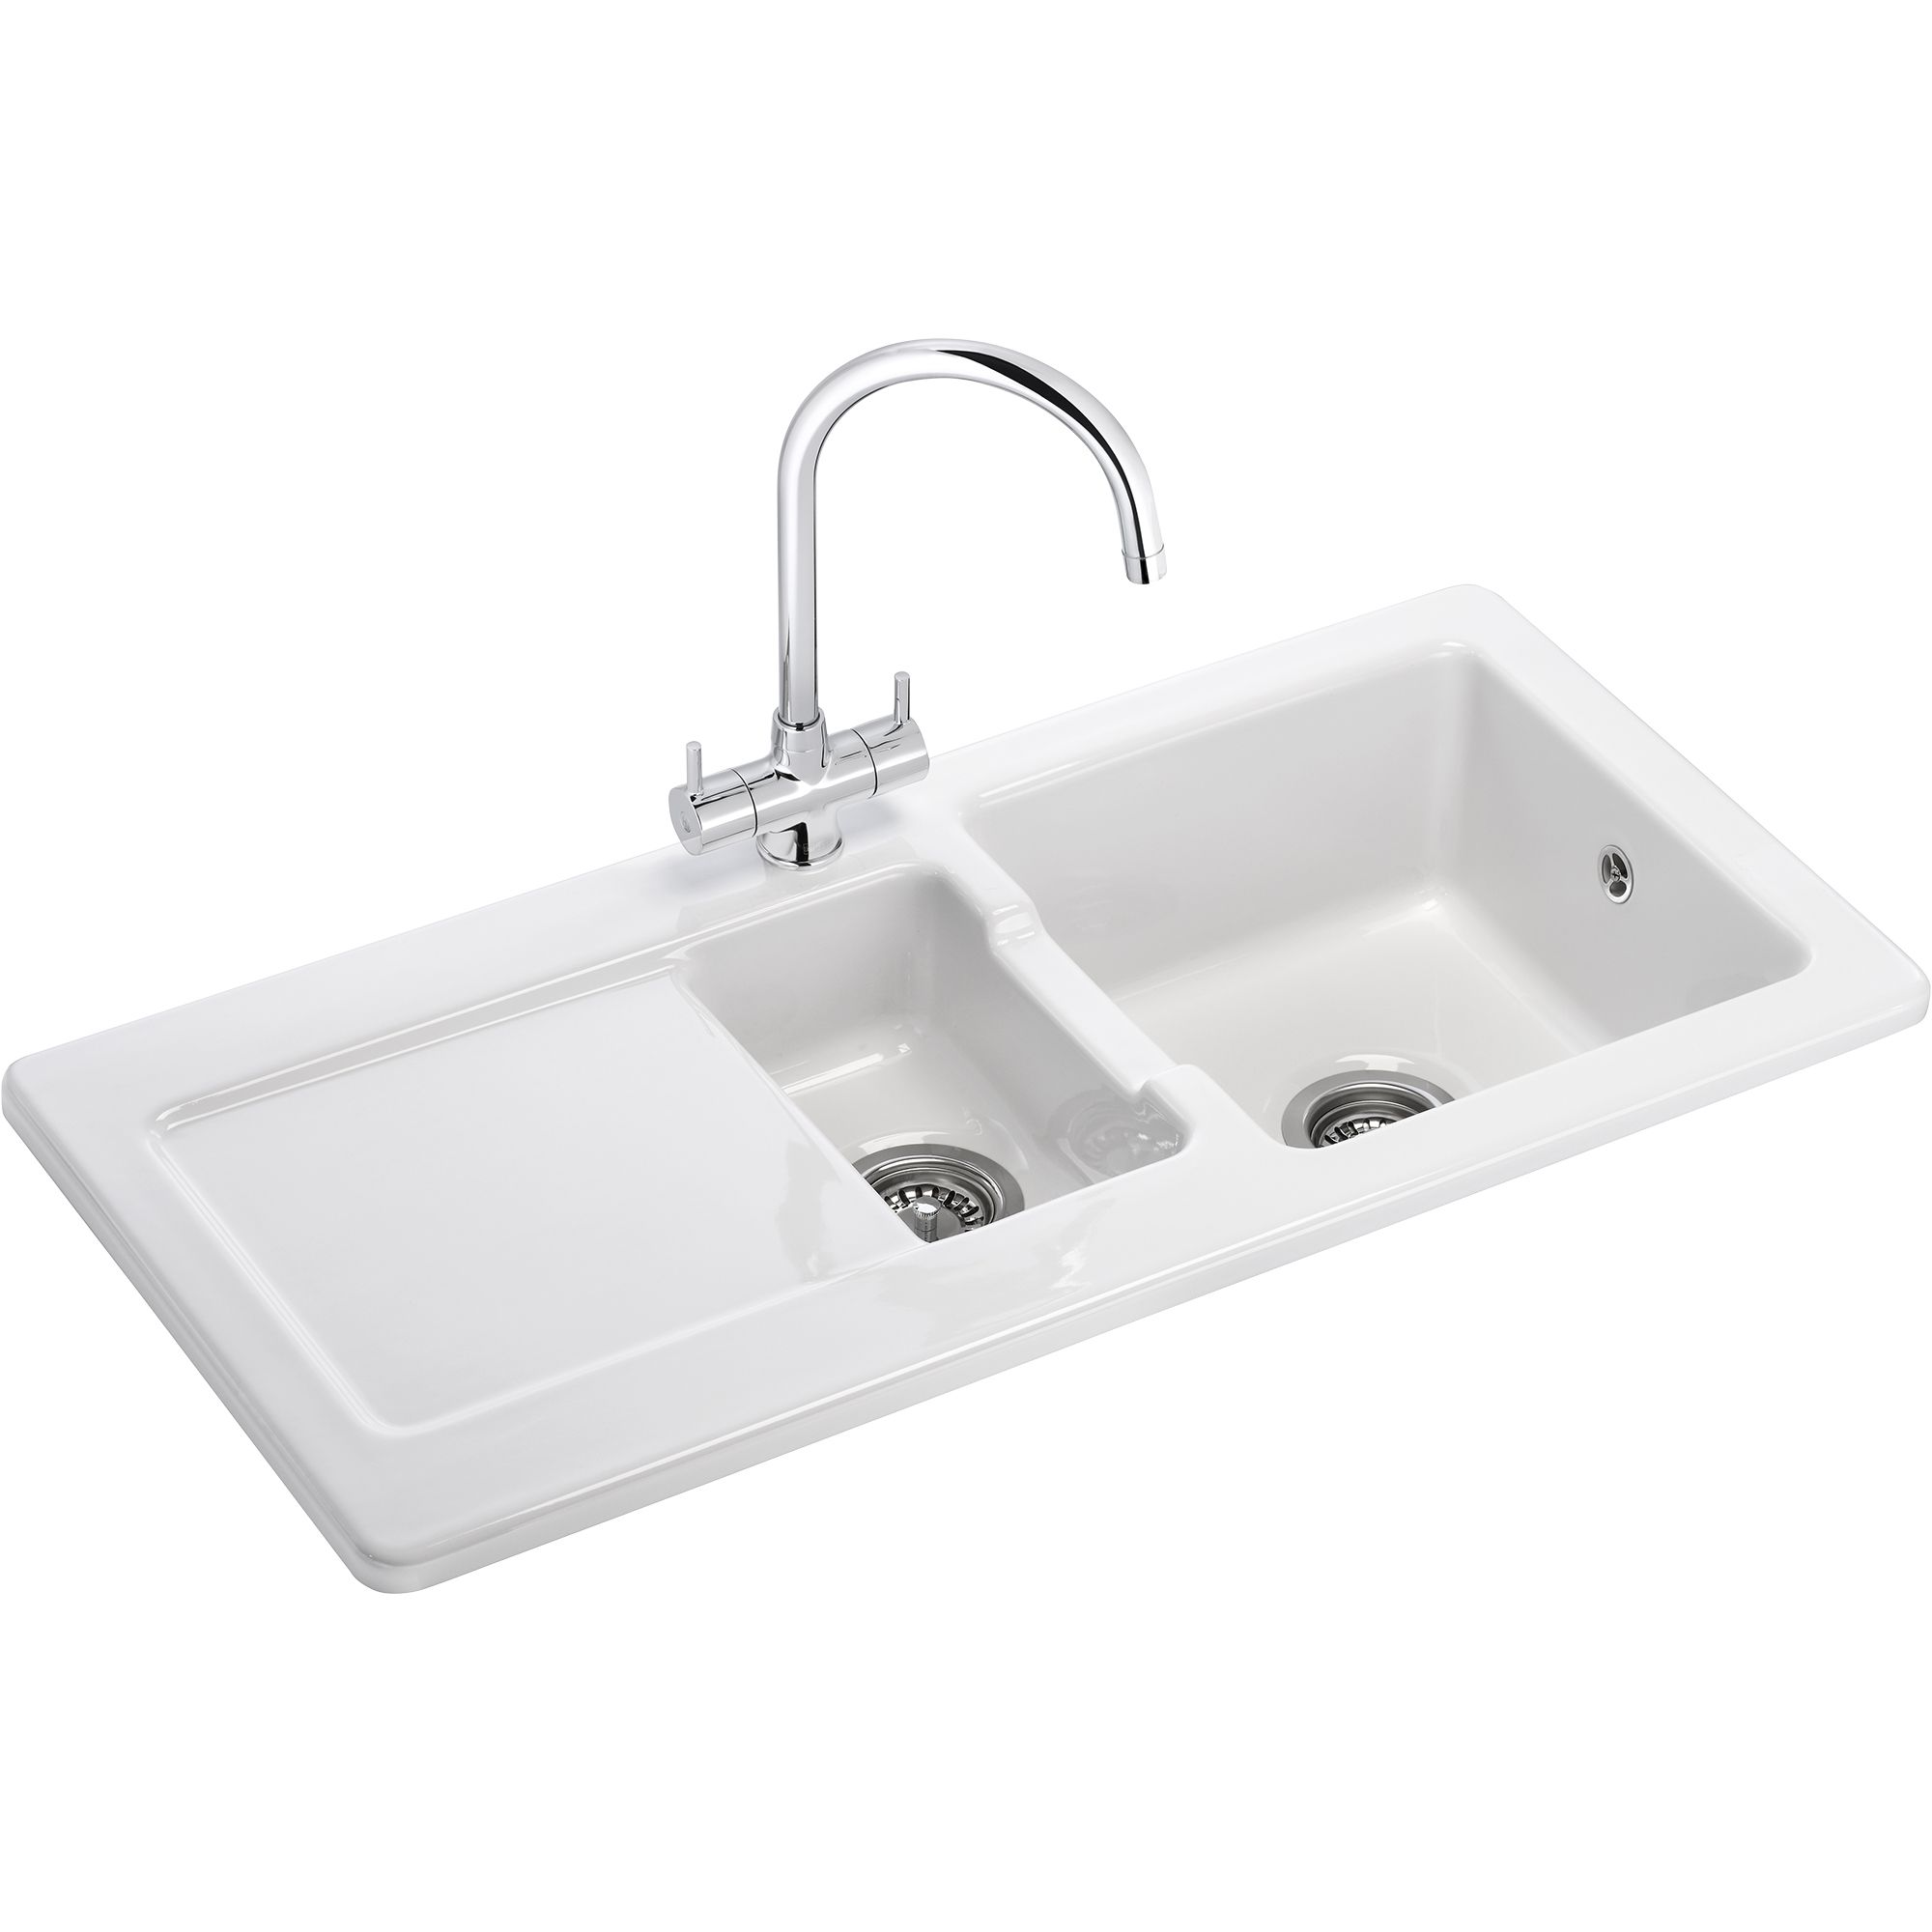 Franke Livorno Gloss White Ceramic 1 5 Bowl Sink Departments Diy At B Q